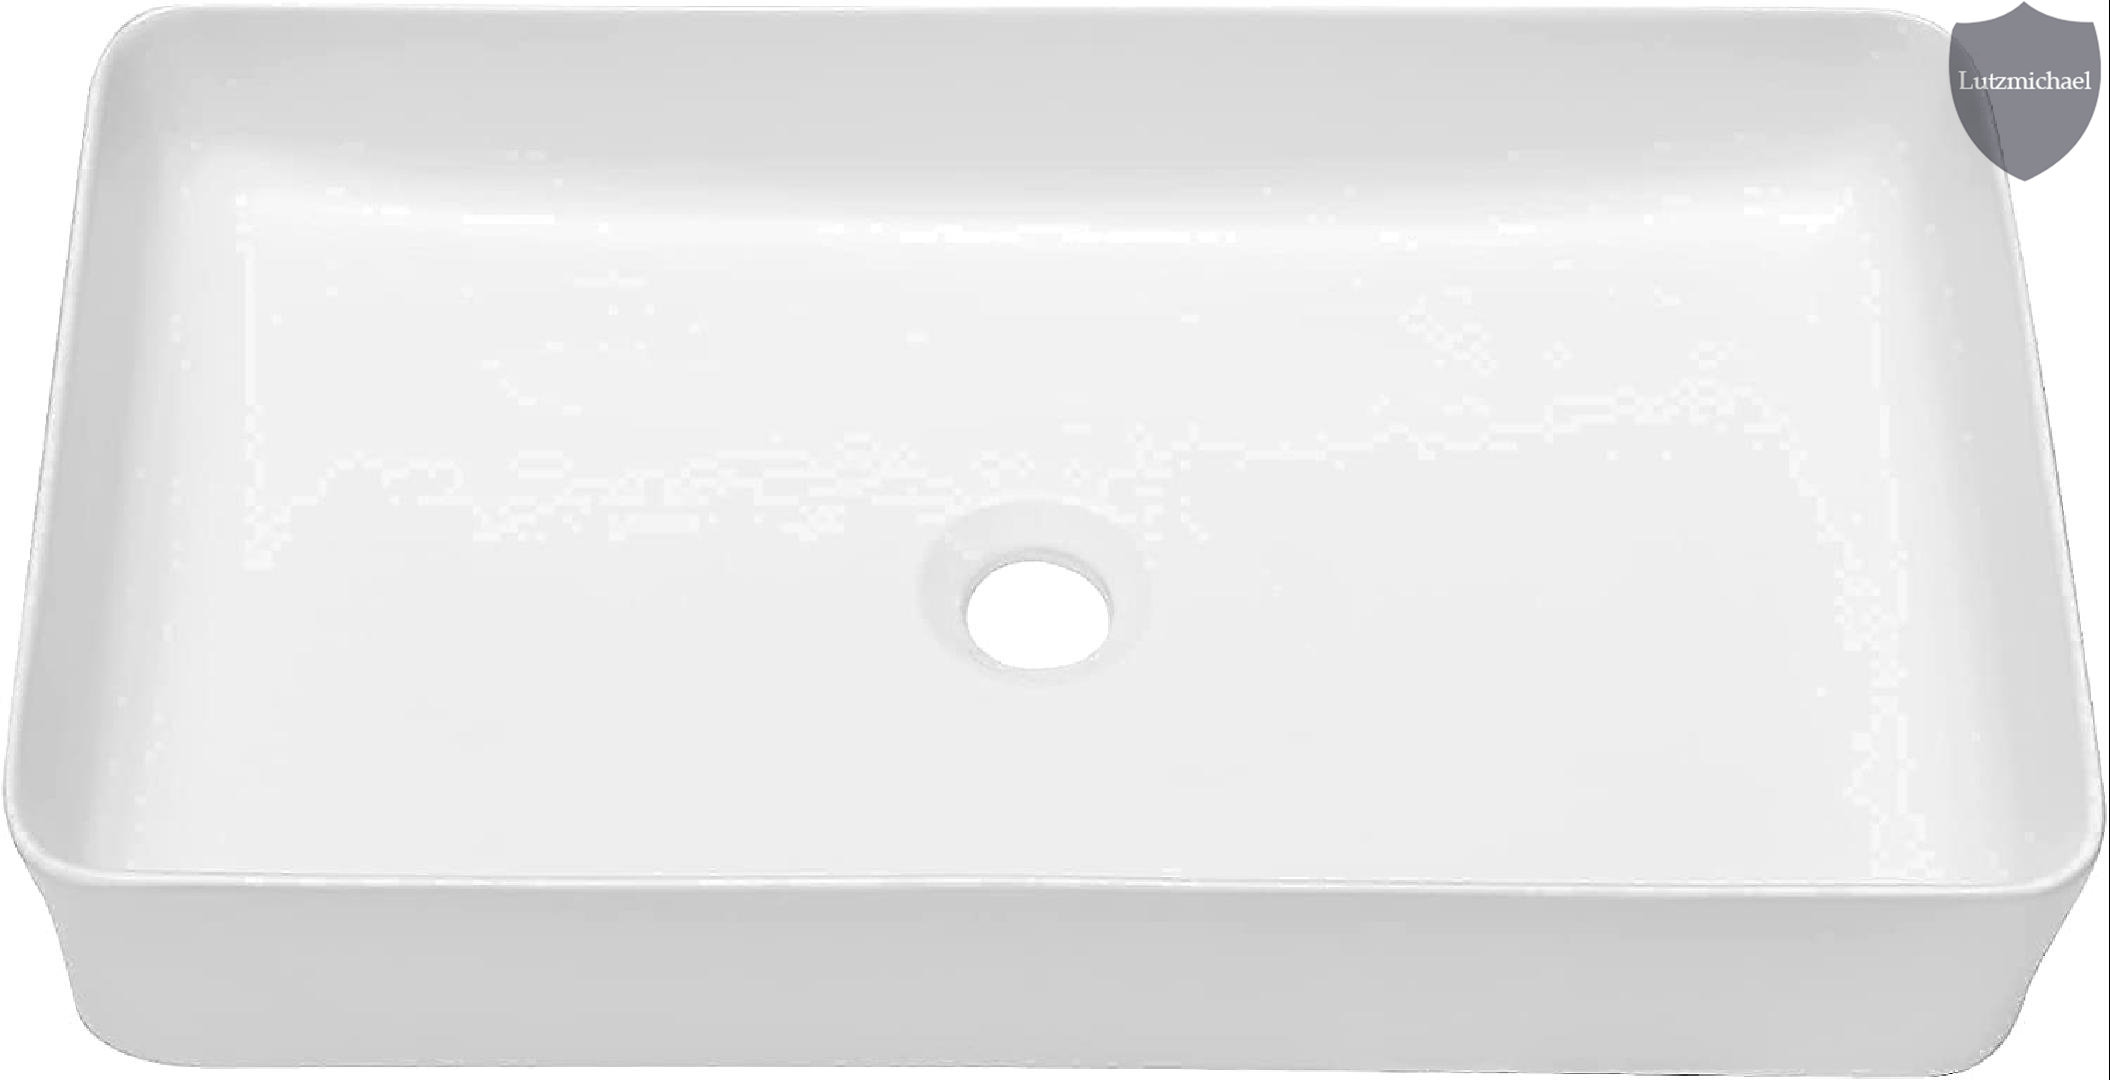 white ceramic rectangular vessel bathroom sink